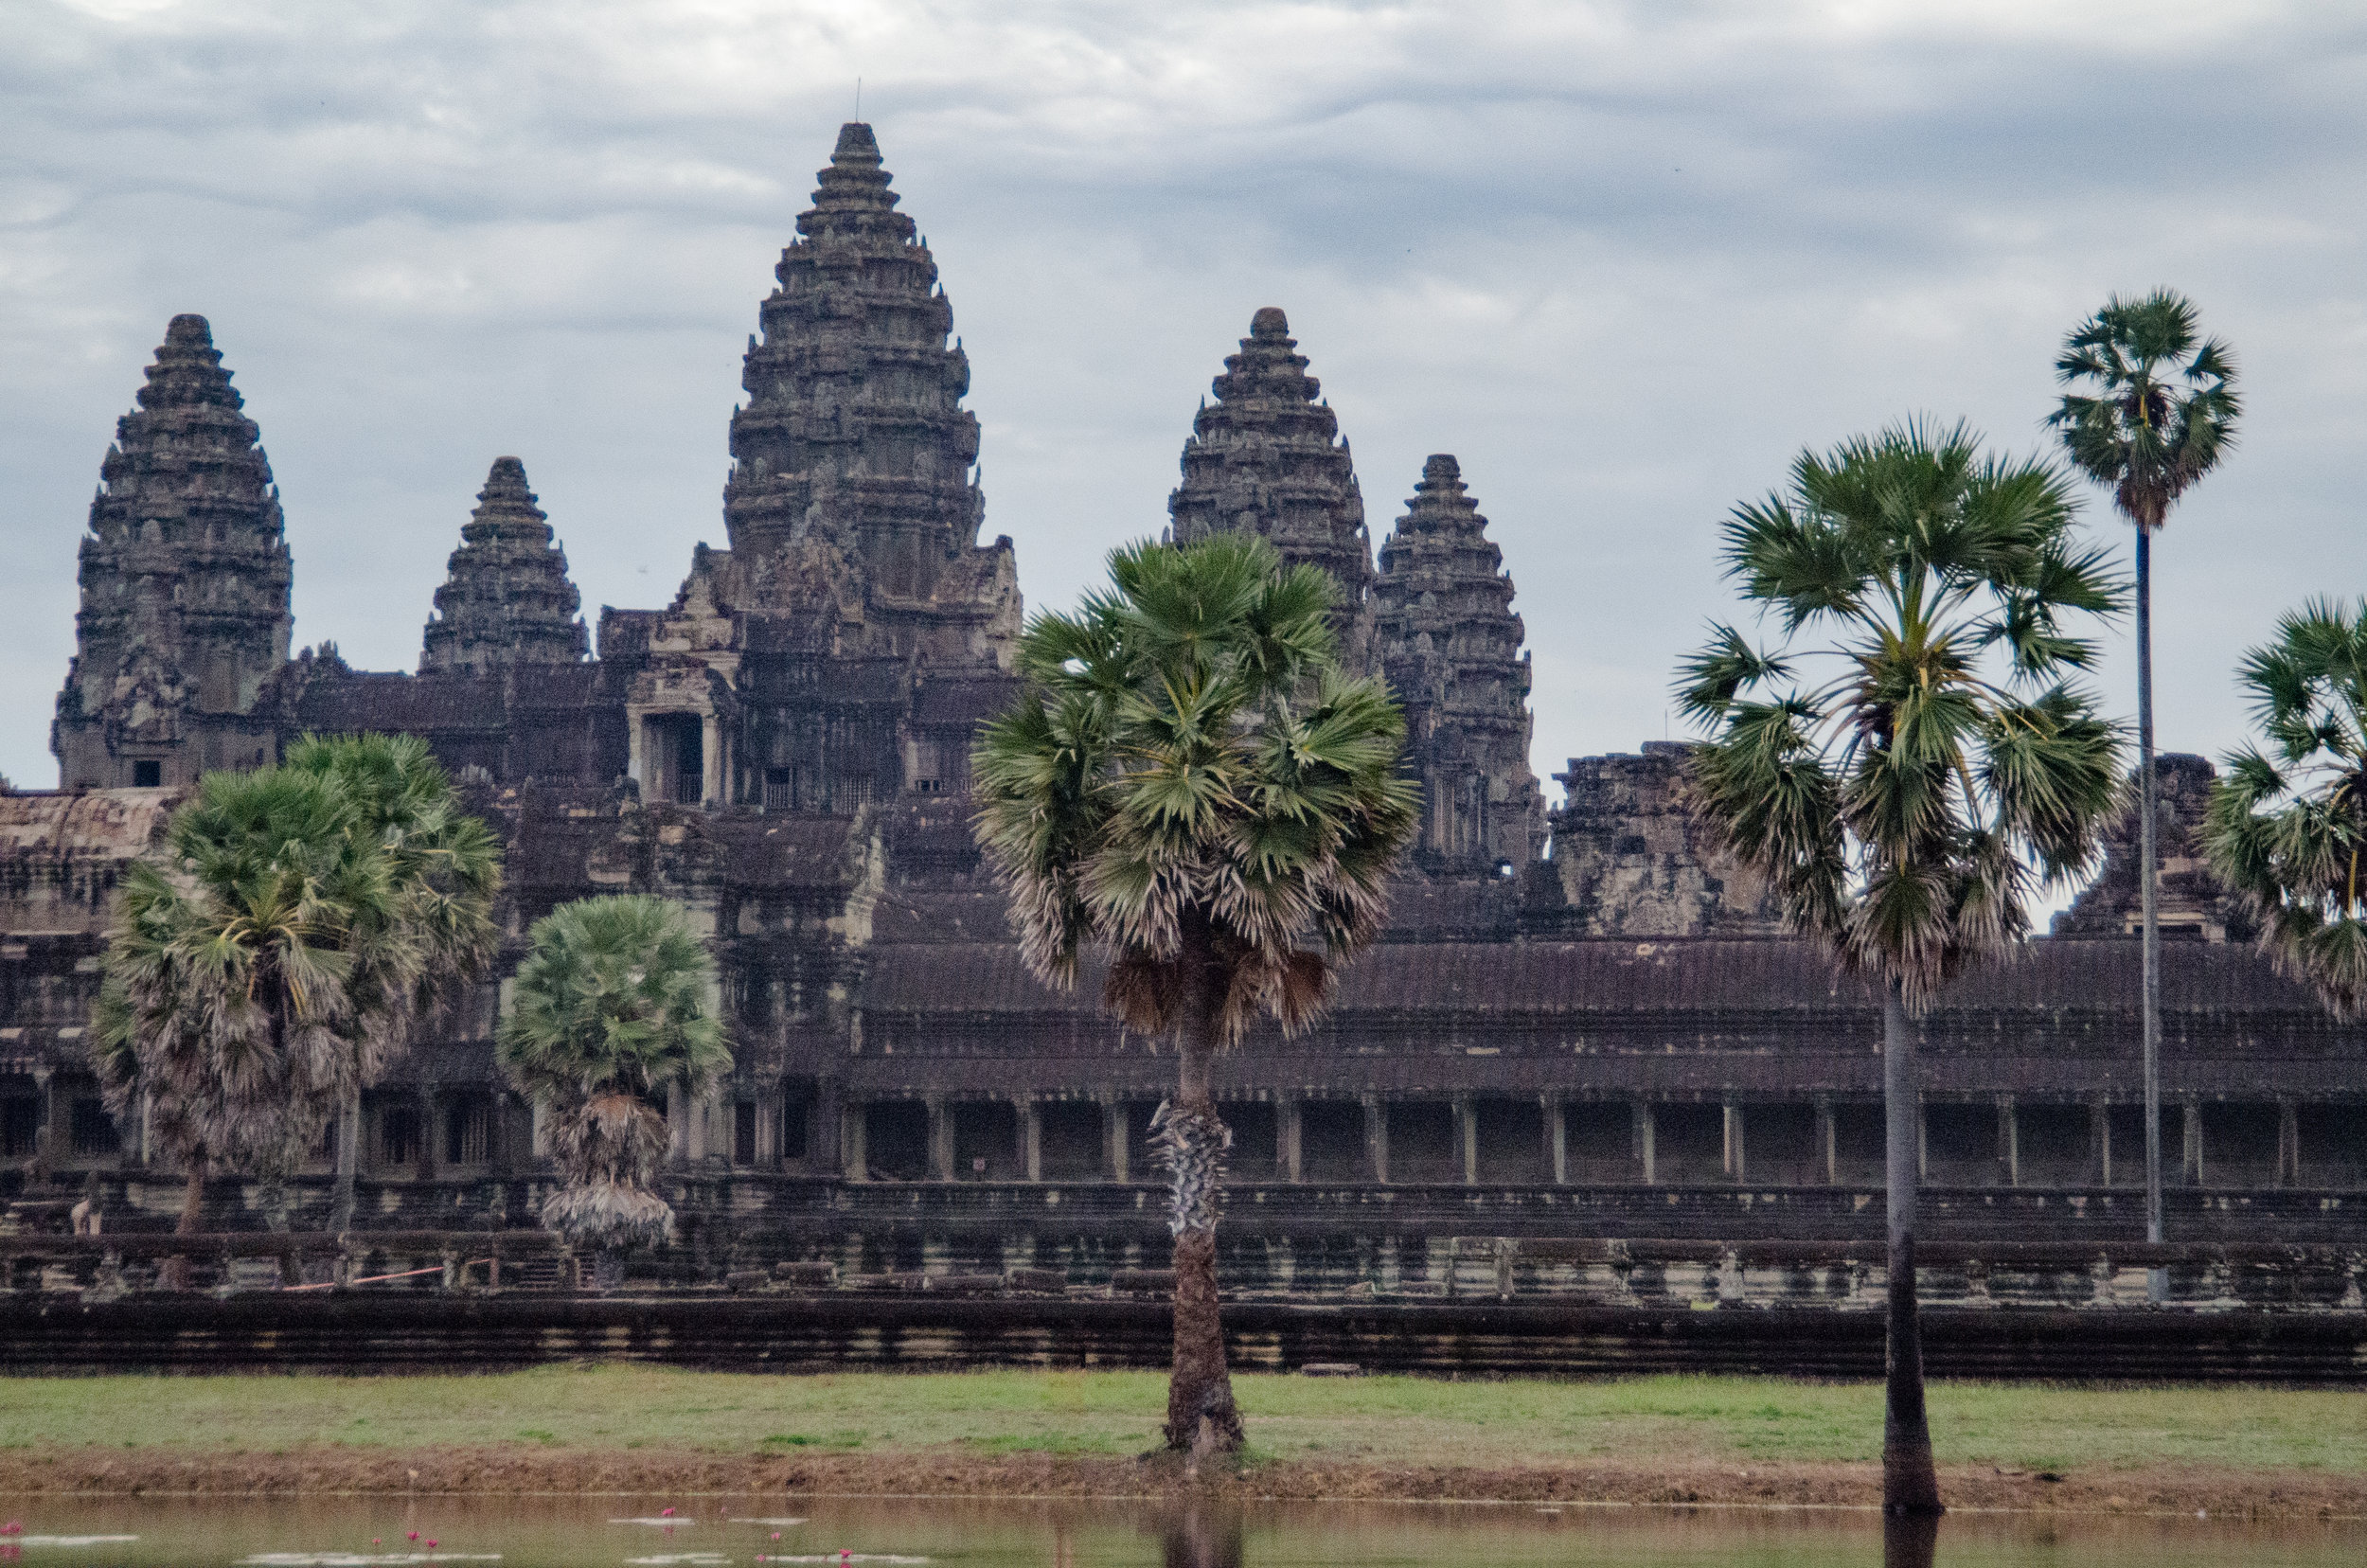 Sunrise, Angkor Wat, Siem Reap, Cambodia